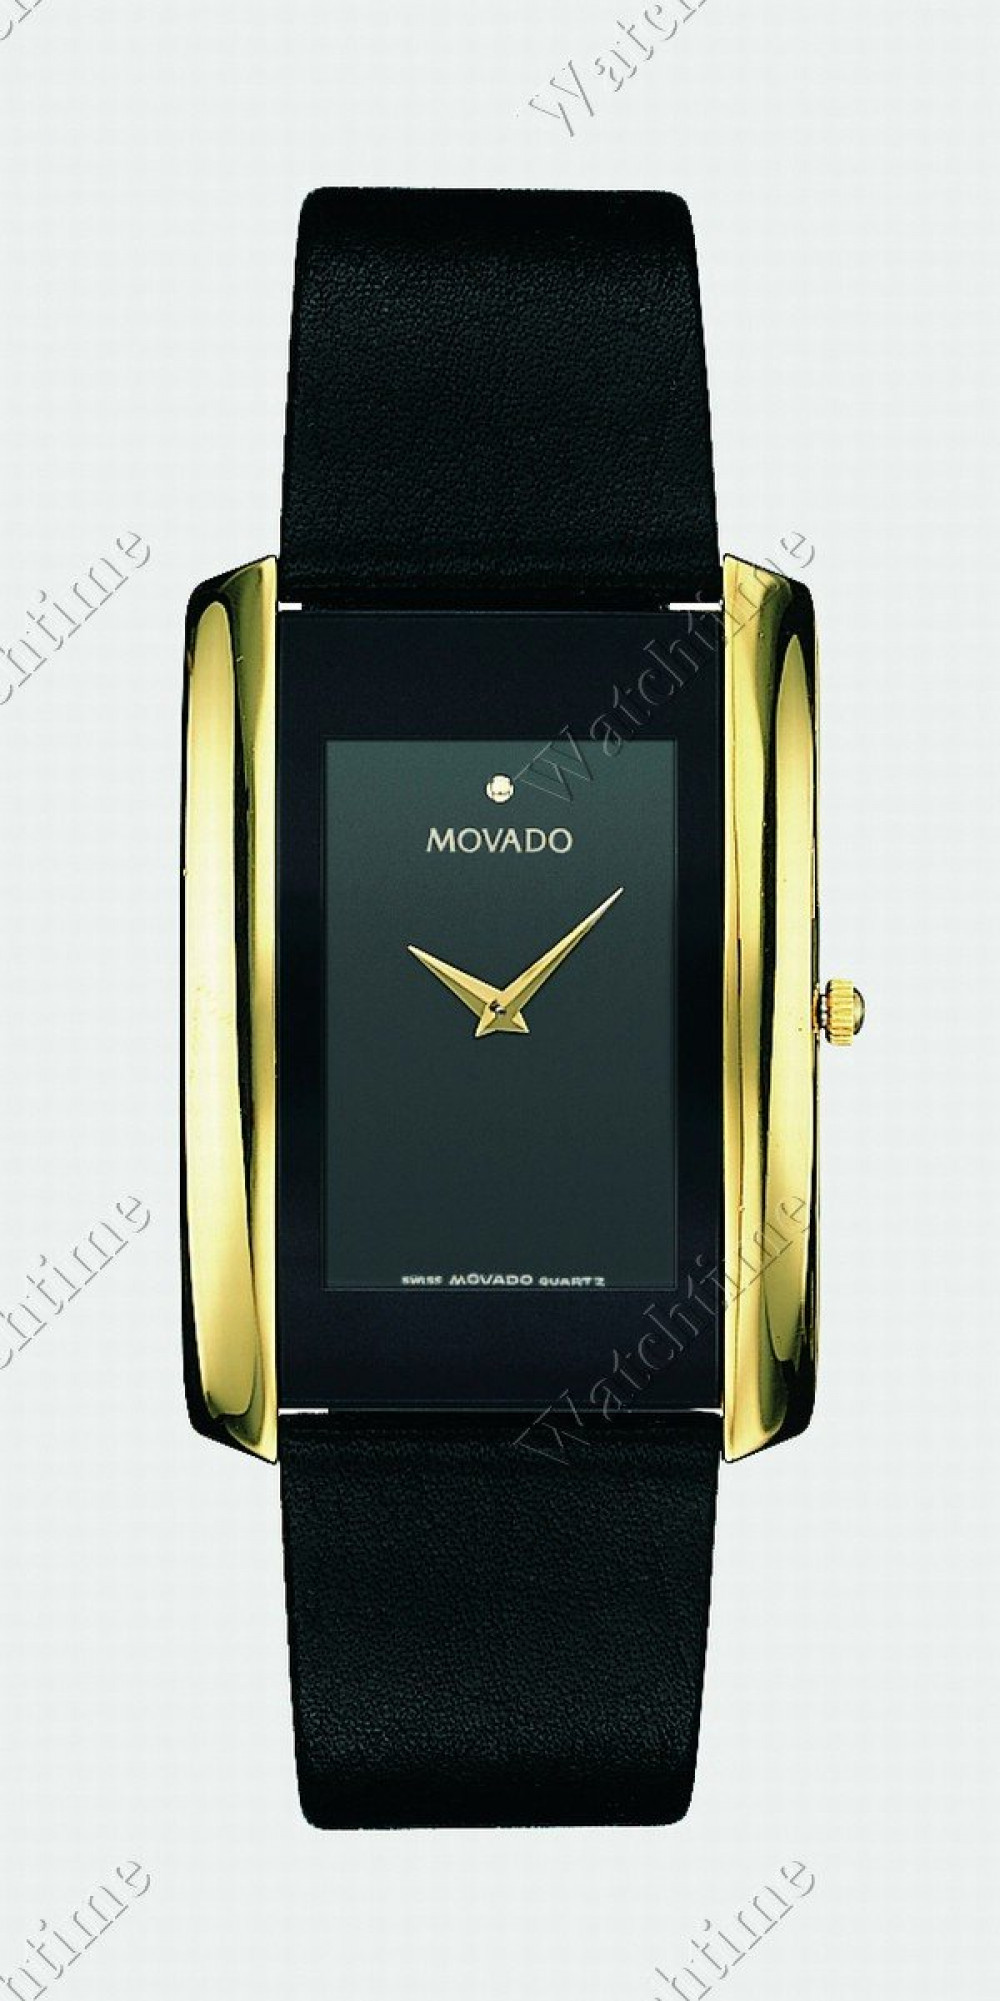 Zegarek firmy Movado, model La Nouvelle